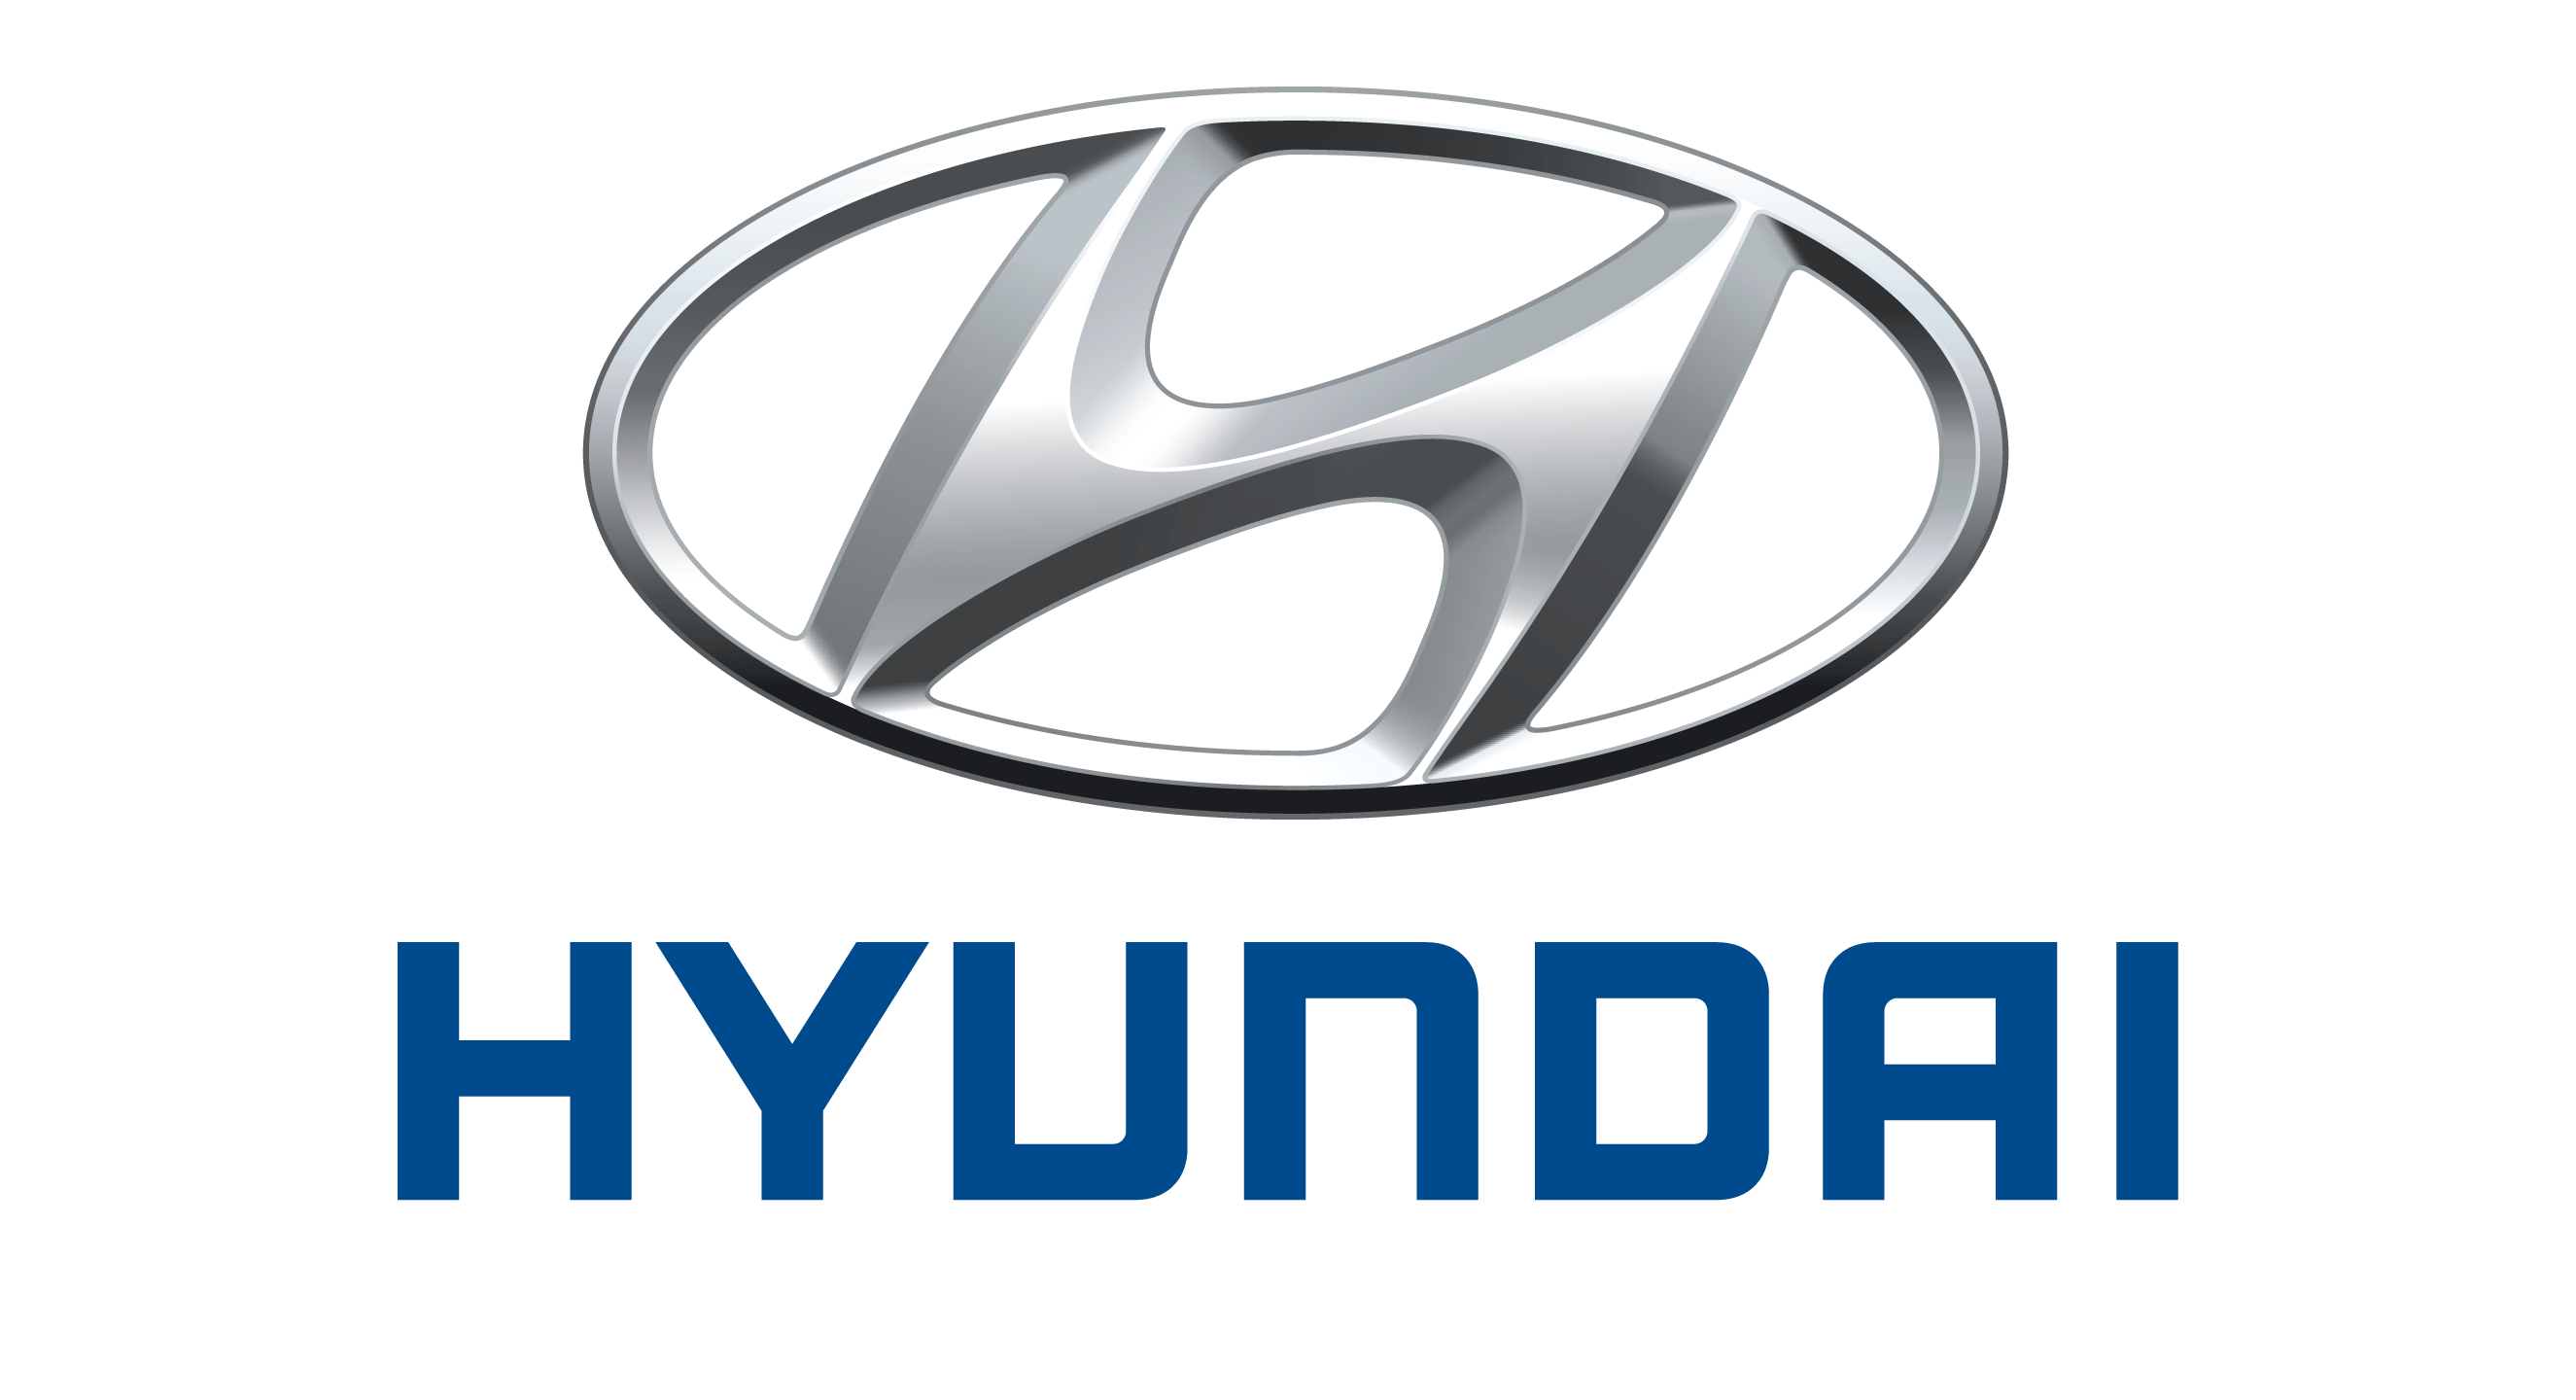 Serwis Hyundai Warszawa